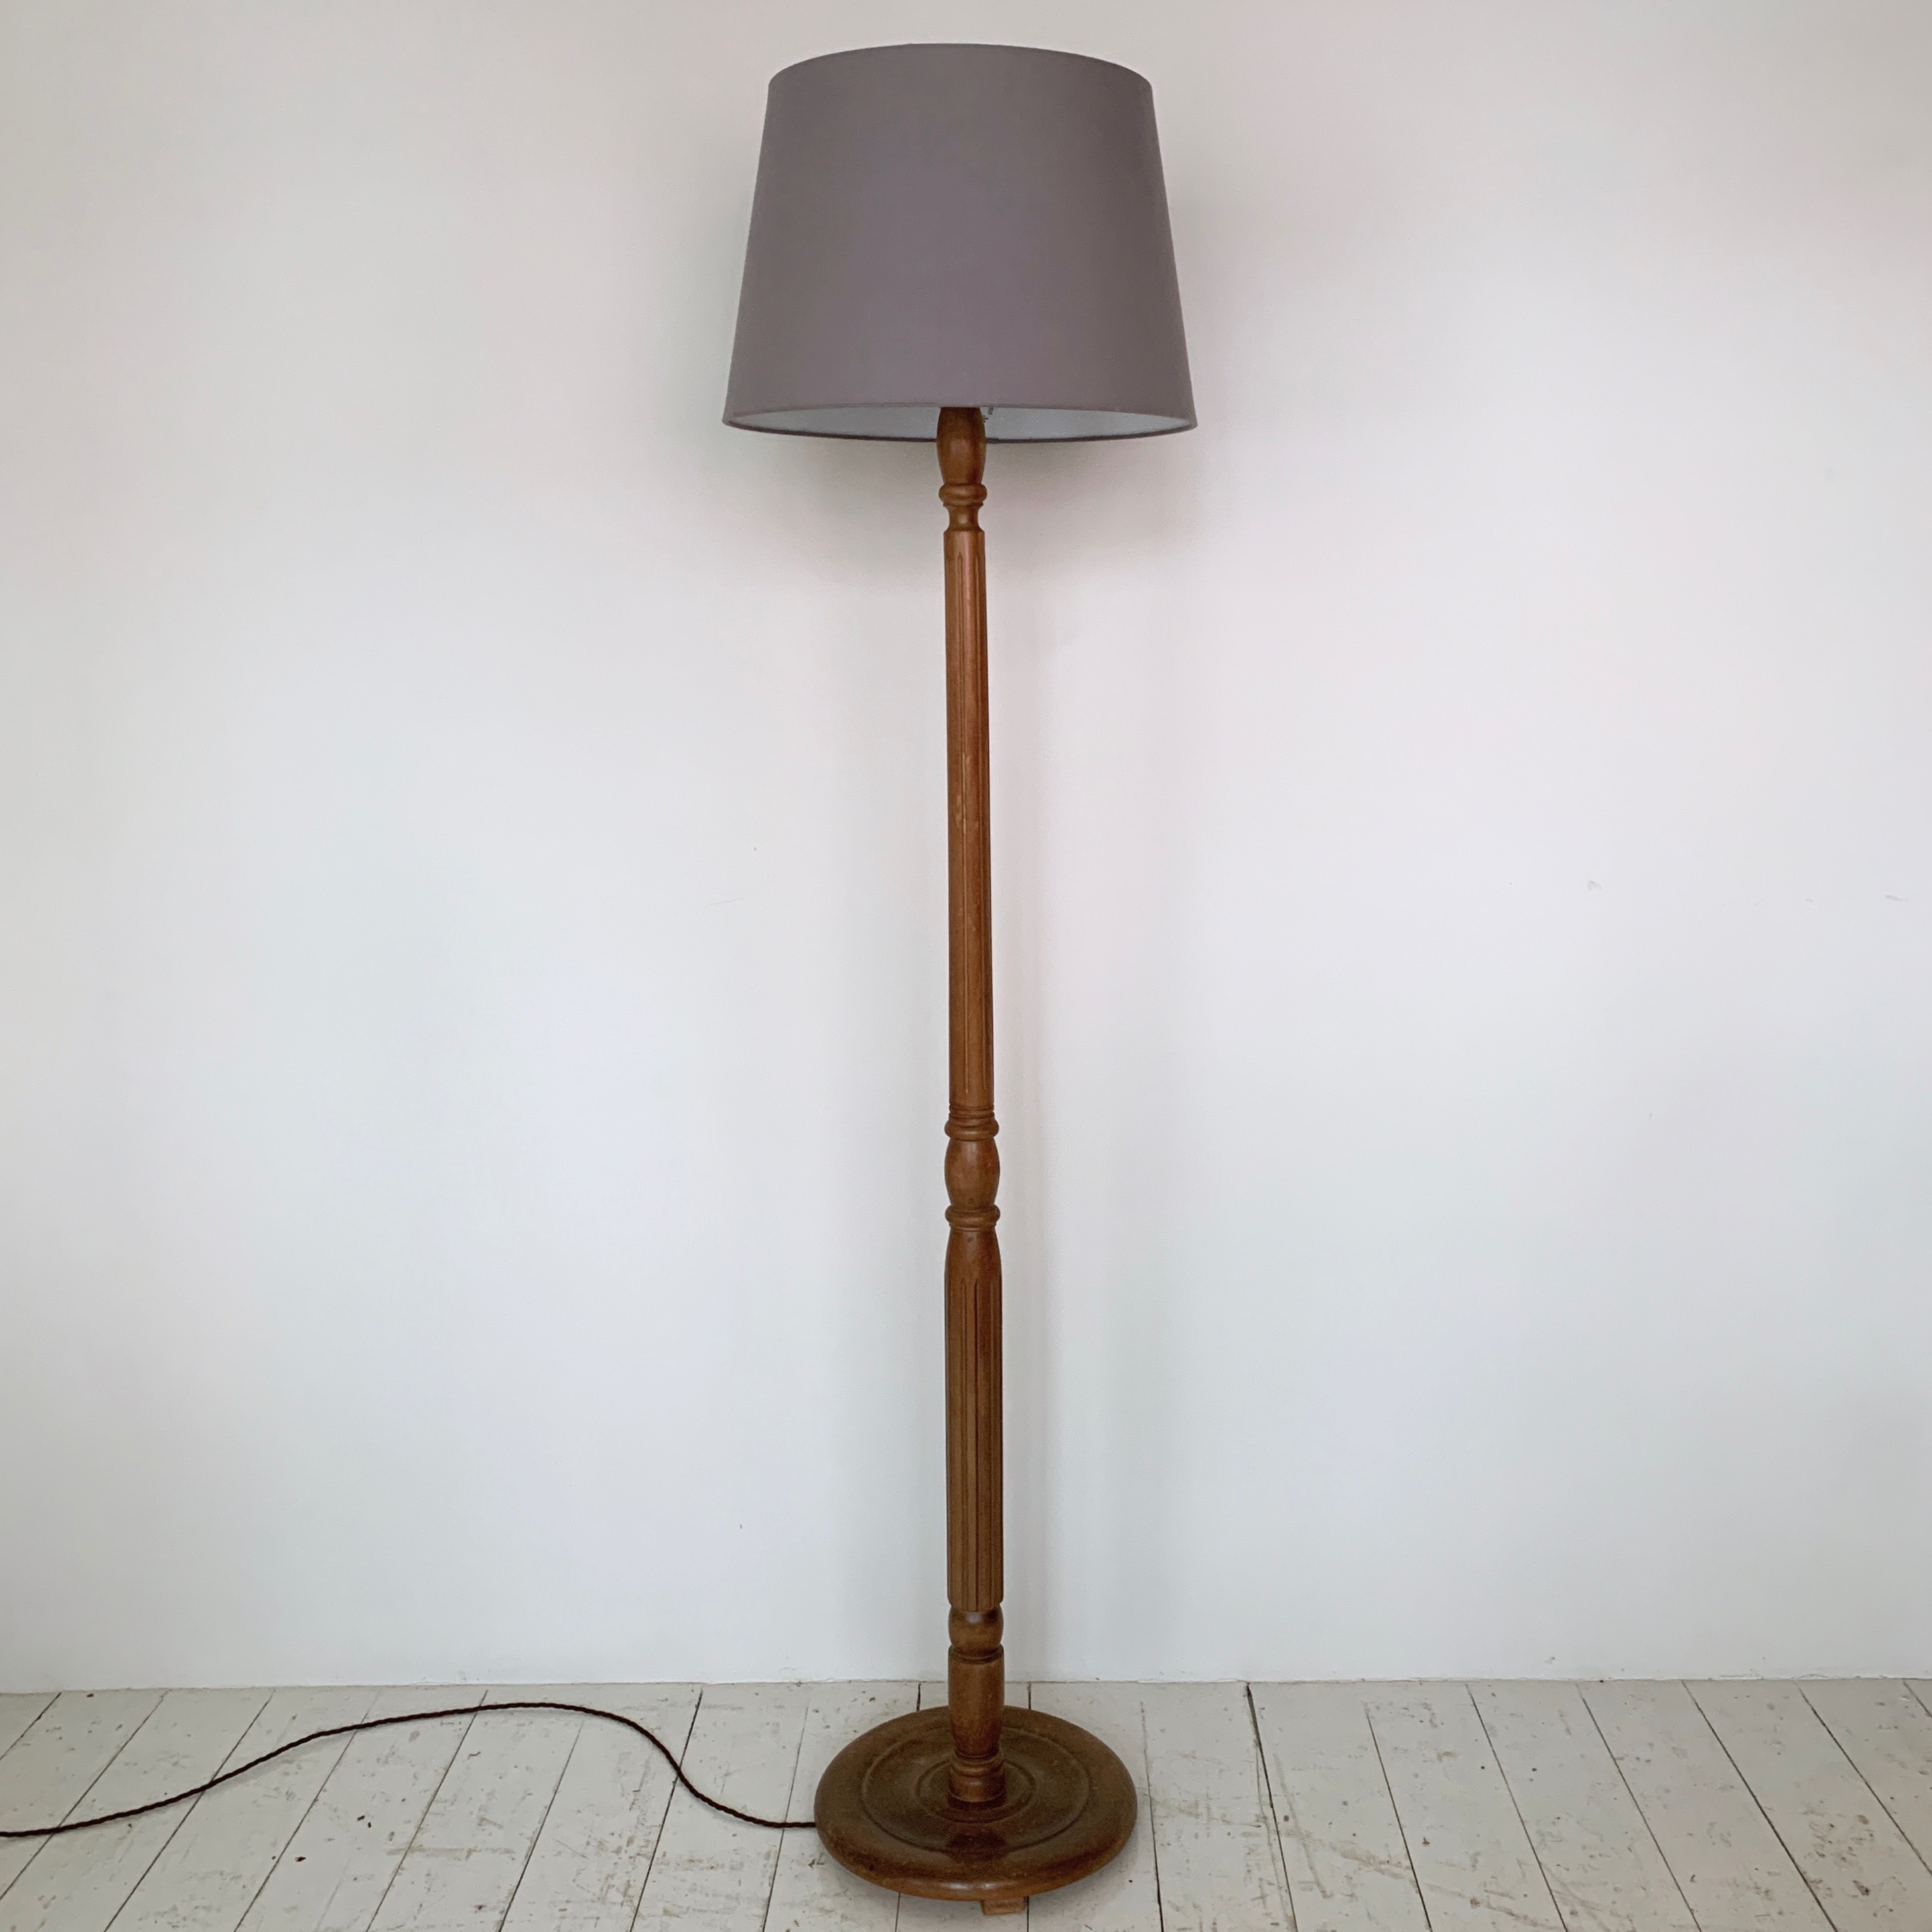 Vintage Stained Wooden Floor Lamp, Antique Wooden Floor Lamps